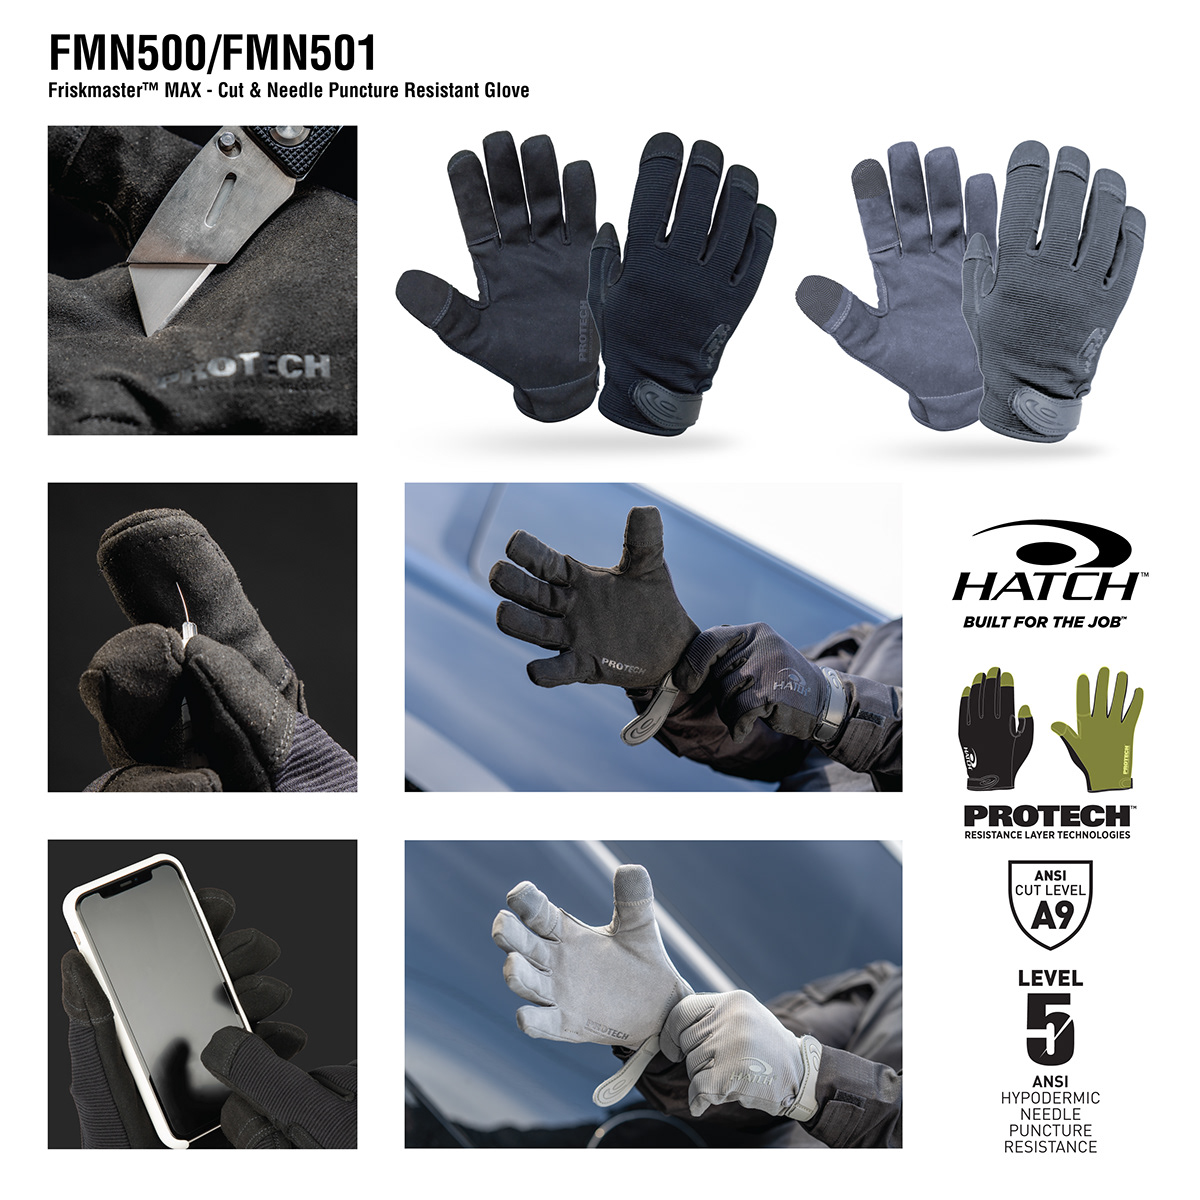 Glove design industrial gloves Product Management workplace saftey